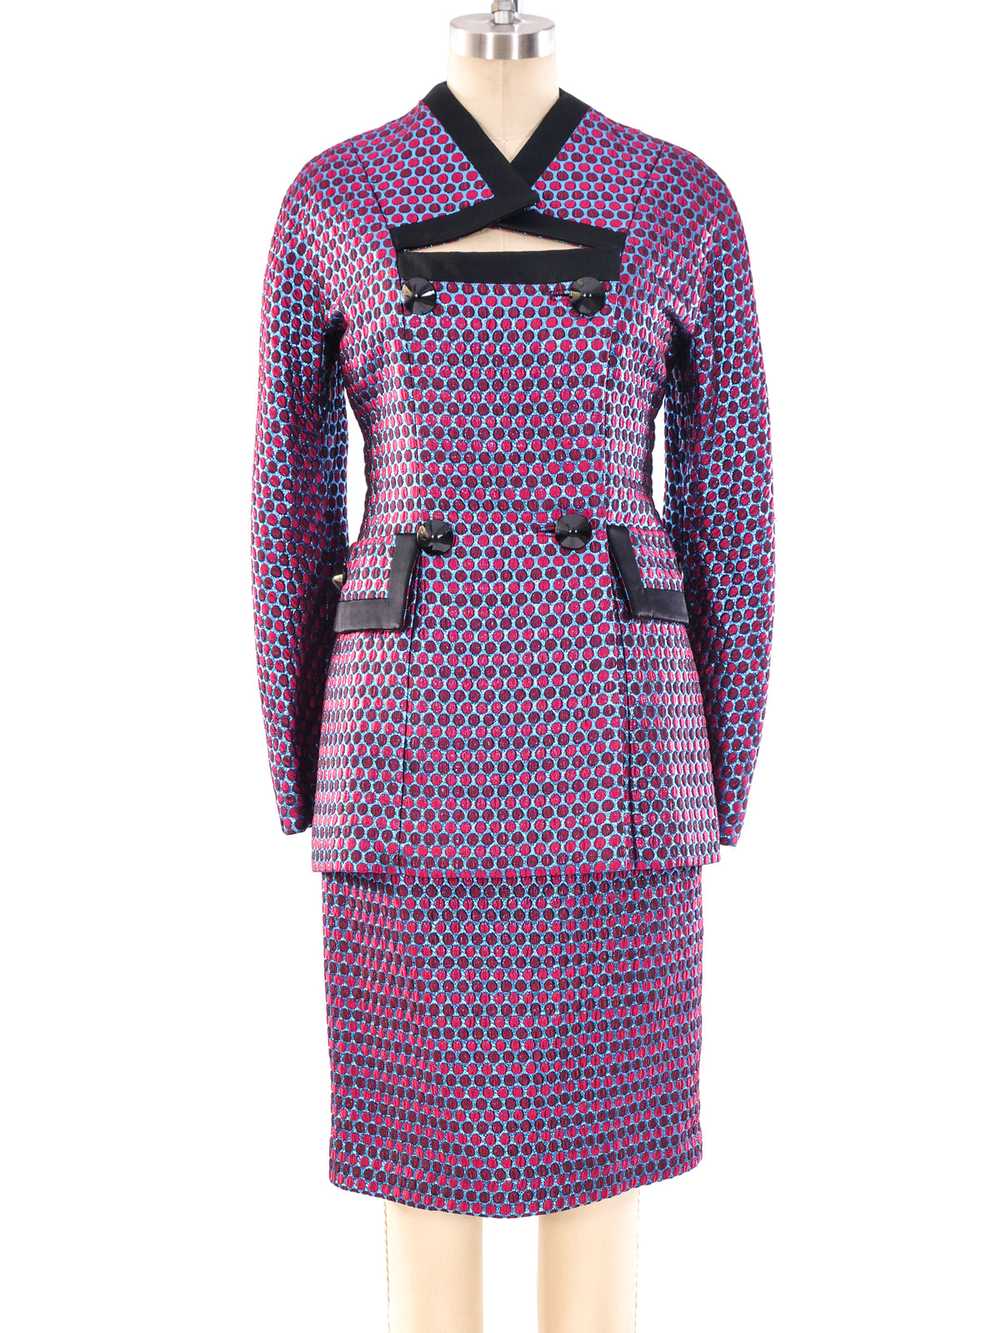 Galanos Tailored Iridescent Brocade Skirt Suit - image 1